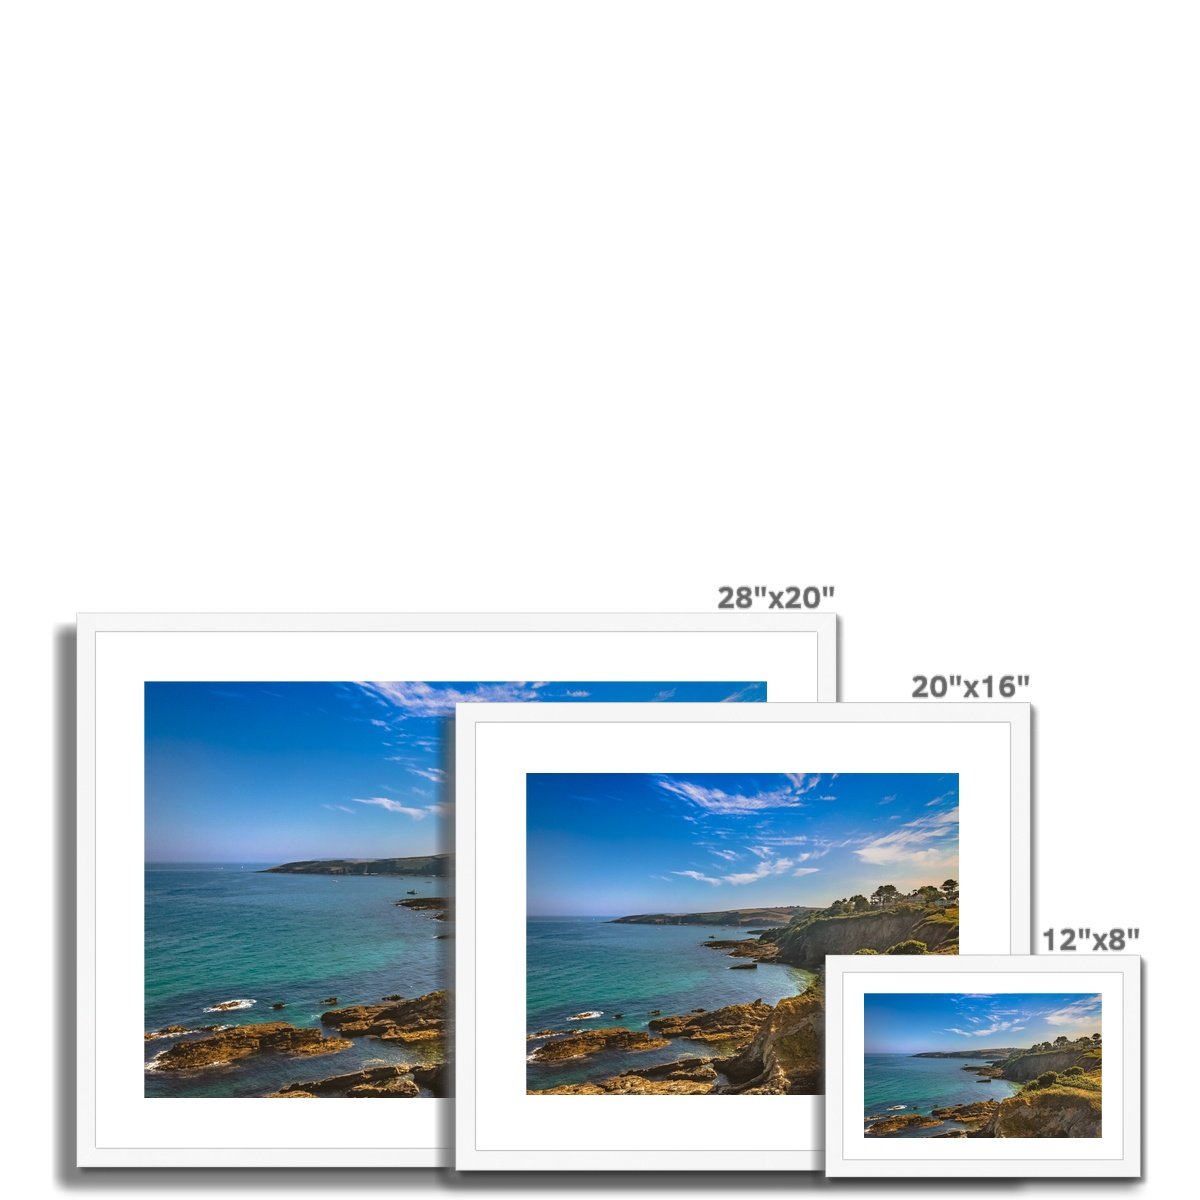 wilkins point maenporth frame sizes